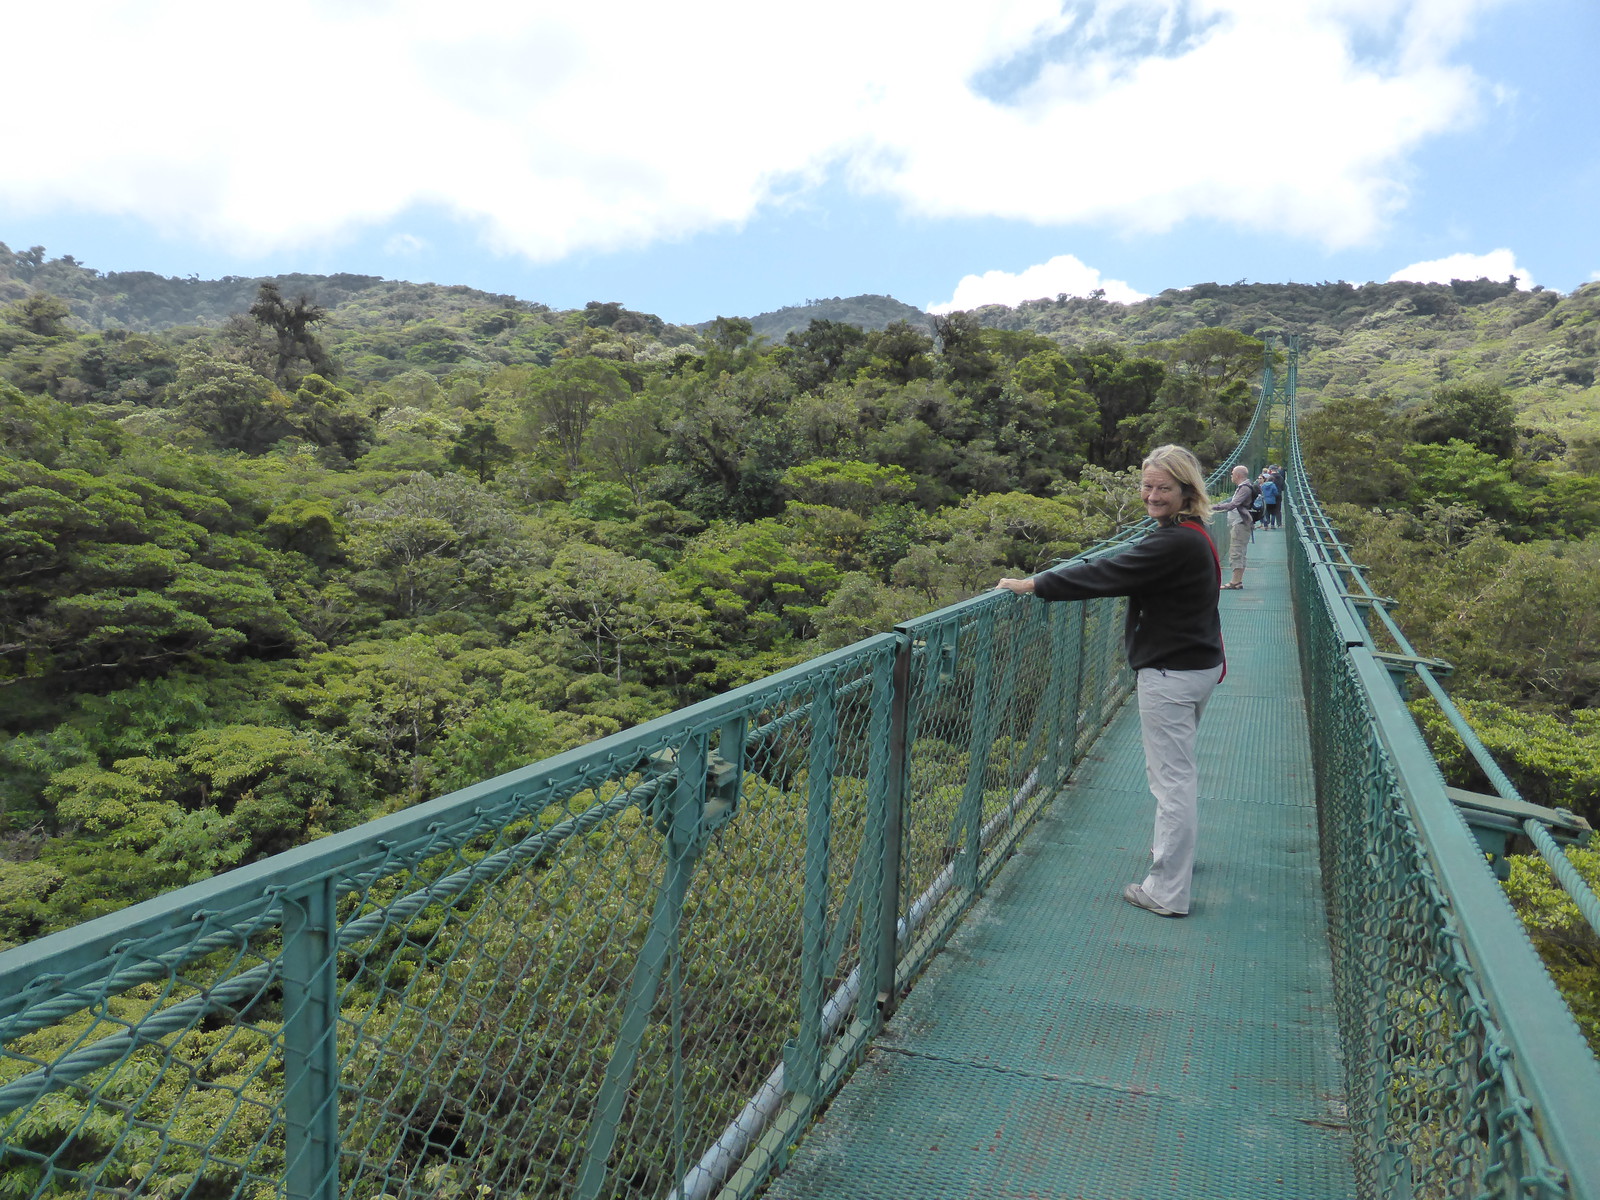 Peta on the canopy walkway at Selvatura Park